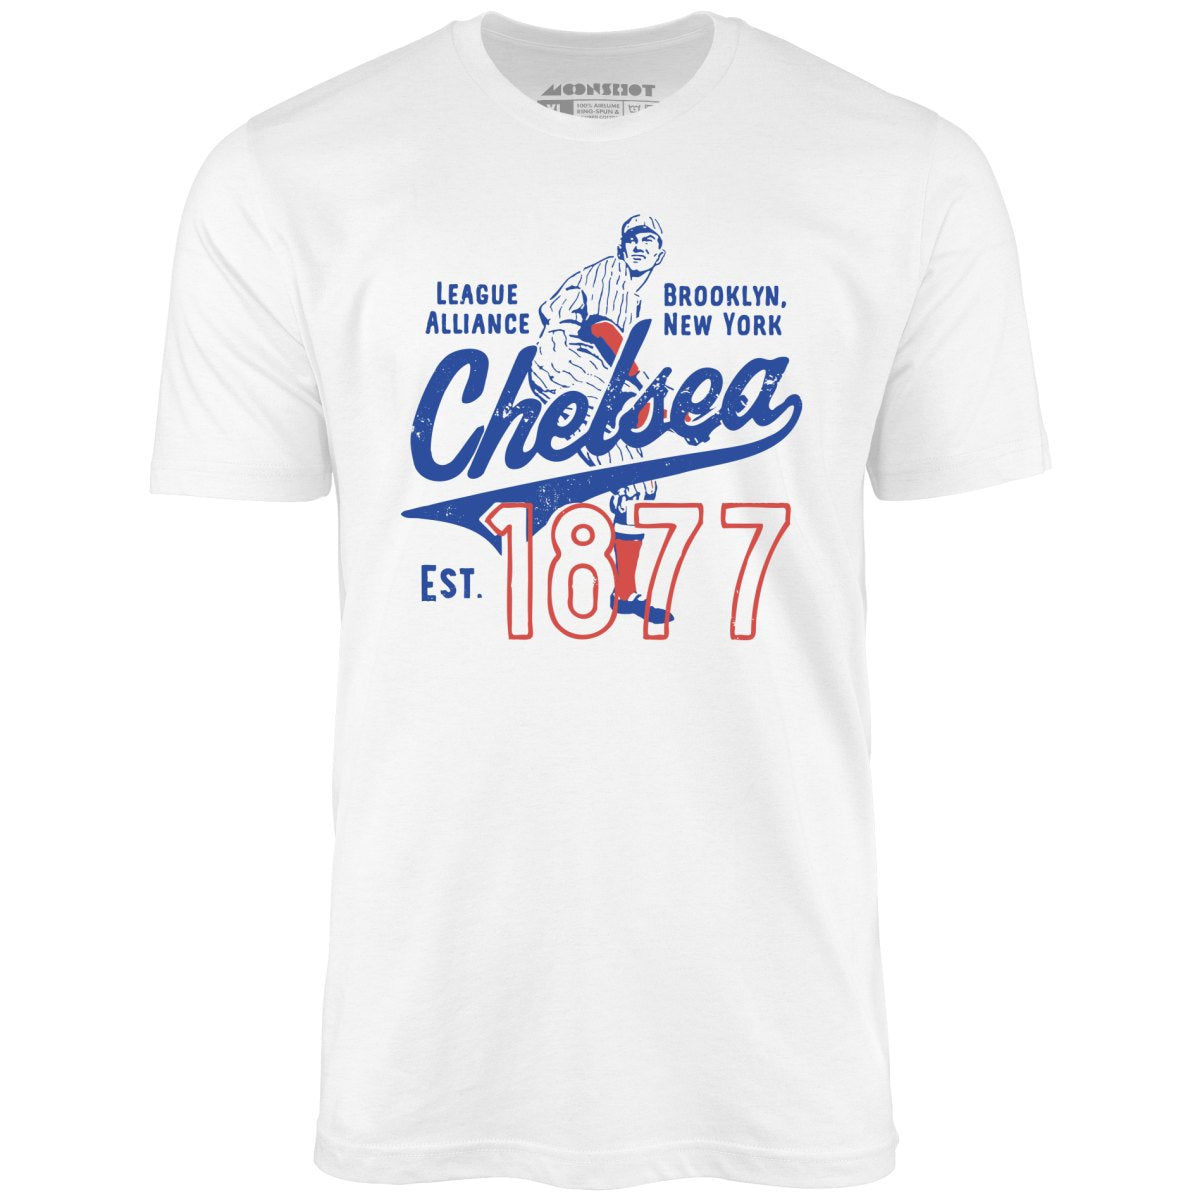 Brooklyn Chelsea - New York - Vintage Defunct Baseball Teams - Unisex T-Shirt